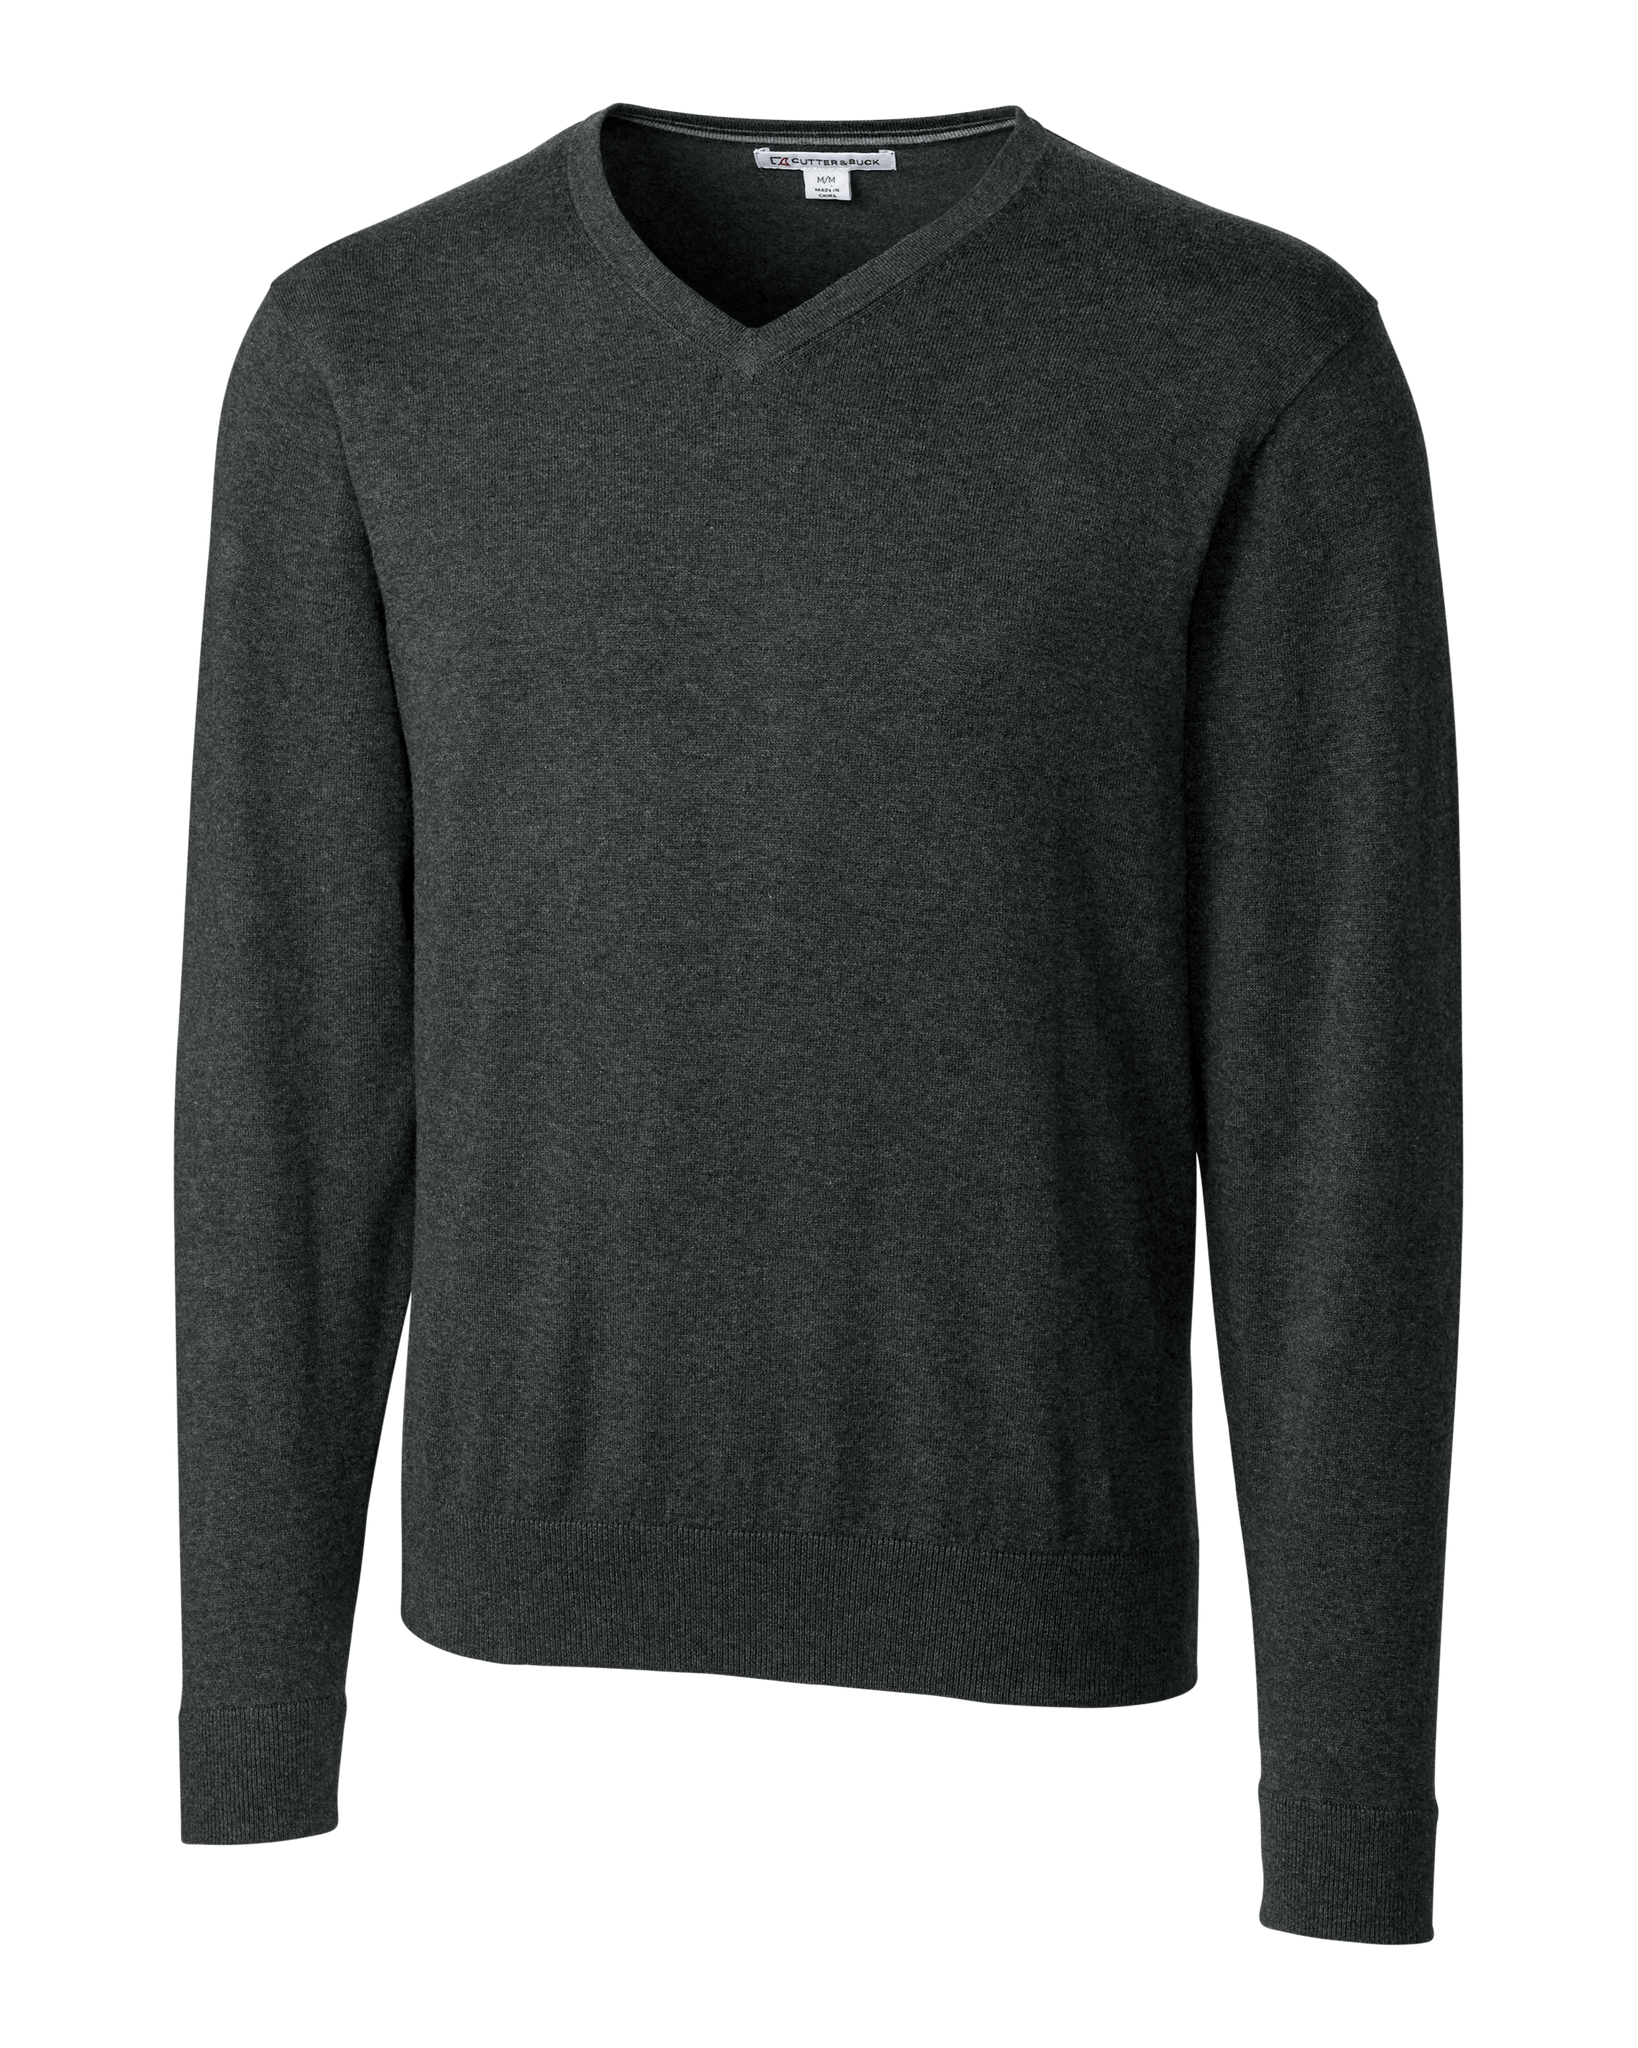 Cutter & Buck Sweaters S / Charcoal Heather Cutter & Buck - Men's Lakemont V-neck